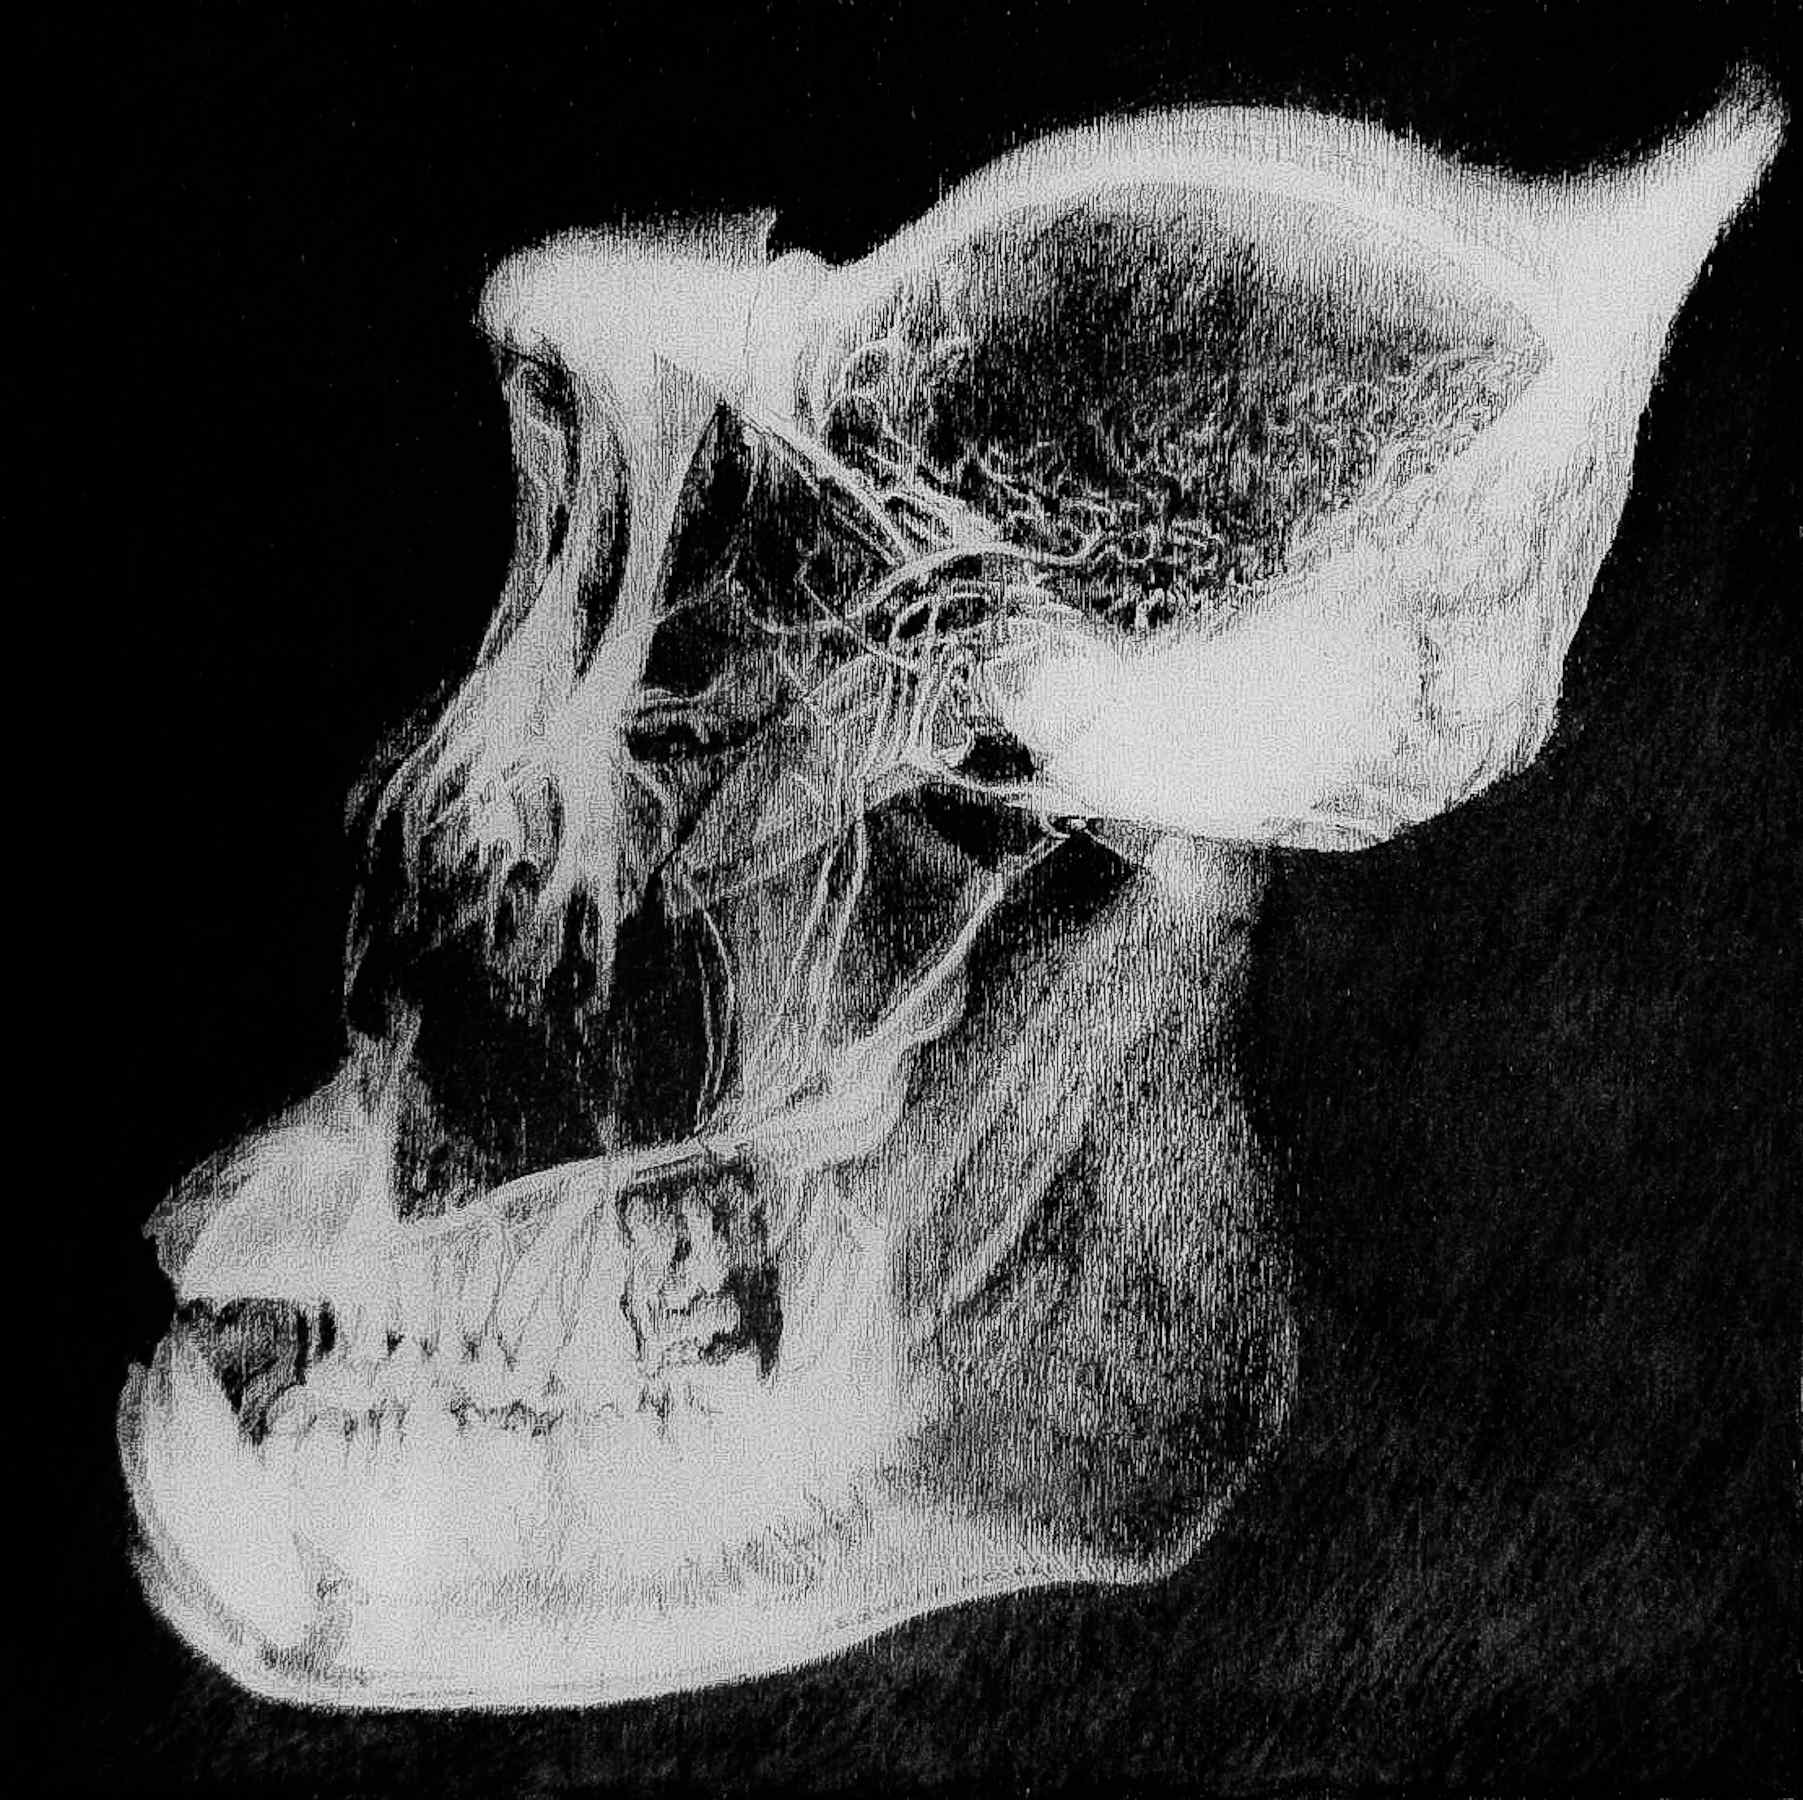 Ape-Skull-x-ray